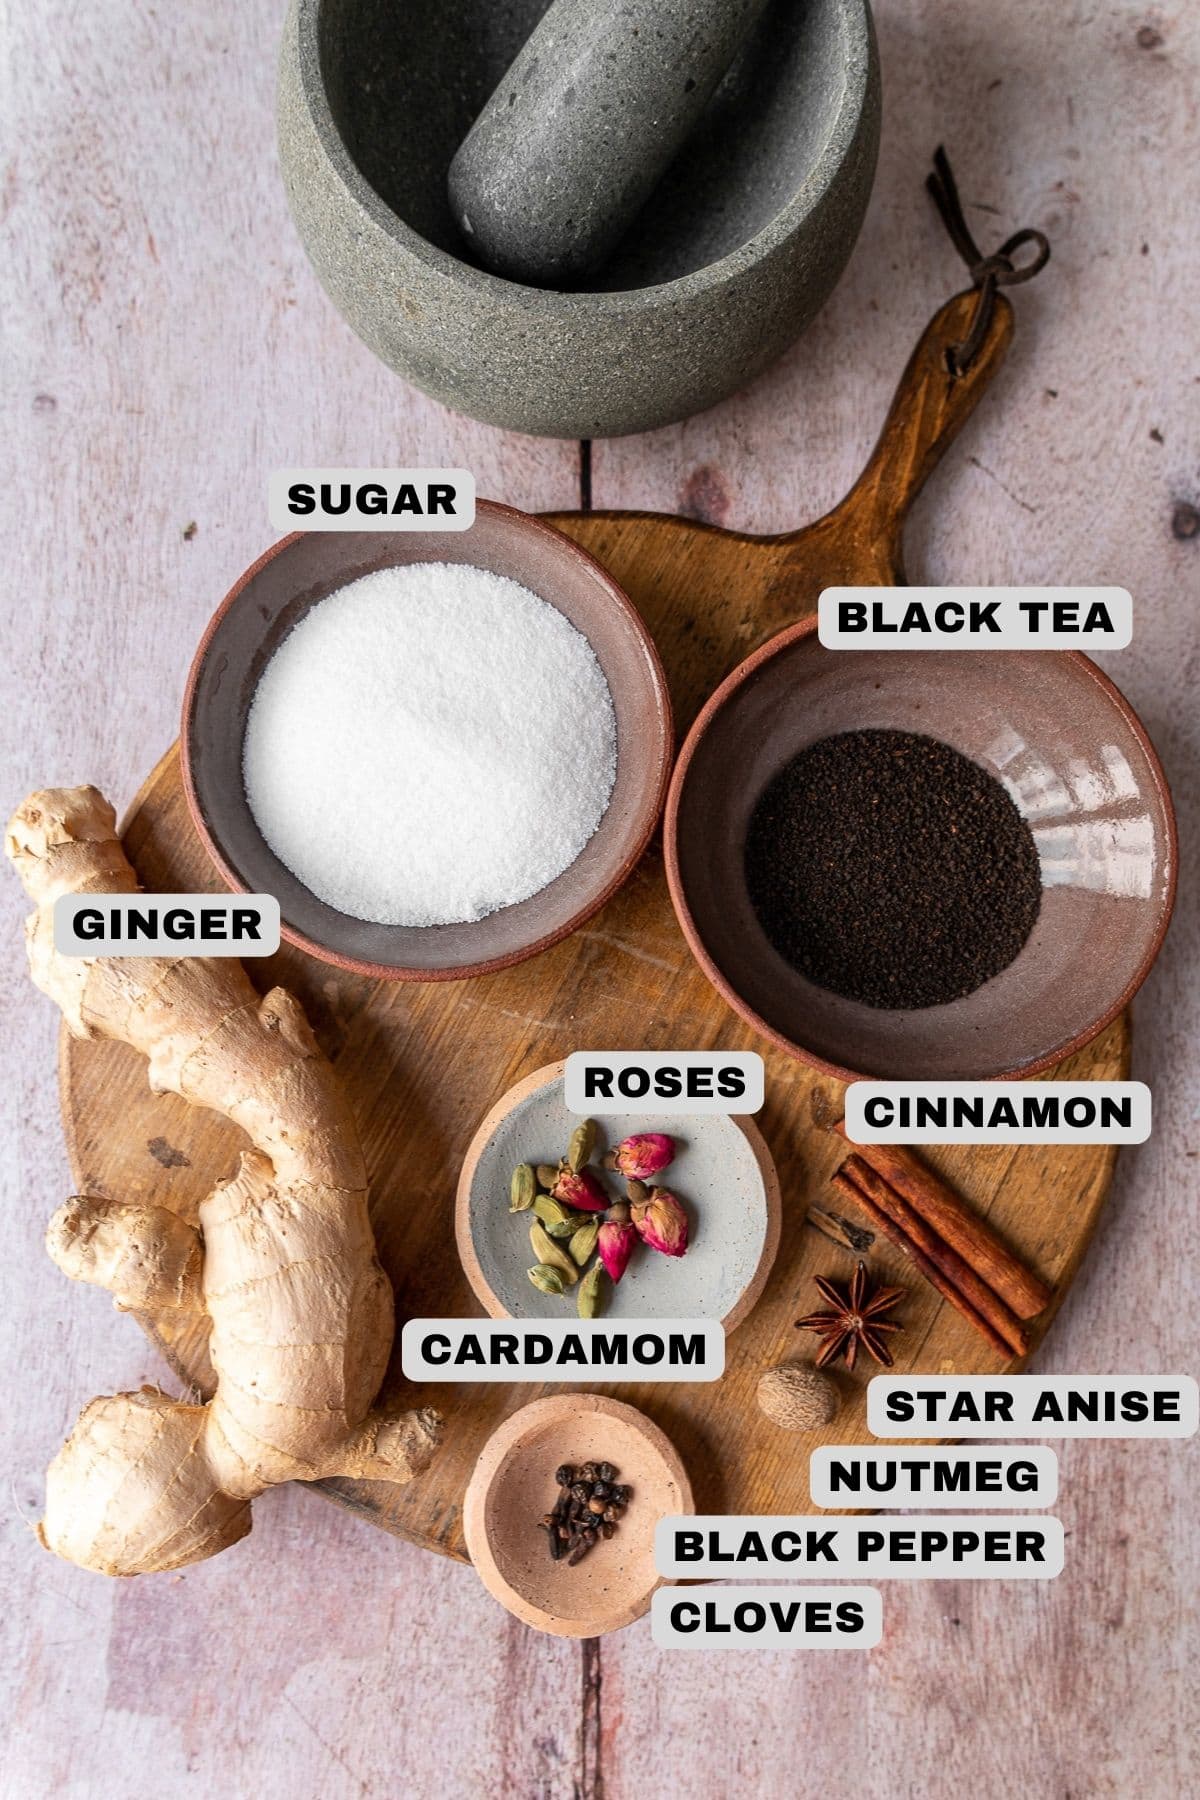 Sugar, black tea, ginger, roses, cardamom, cinnamon, star anise, nutmeg, black pepper, cloves ingredients with labels.